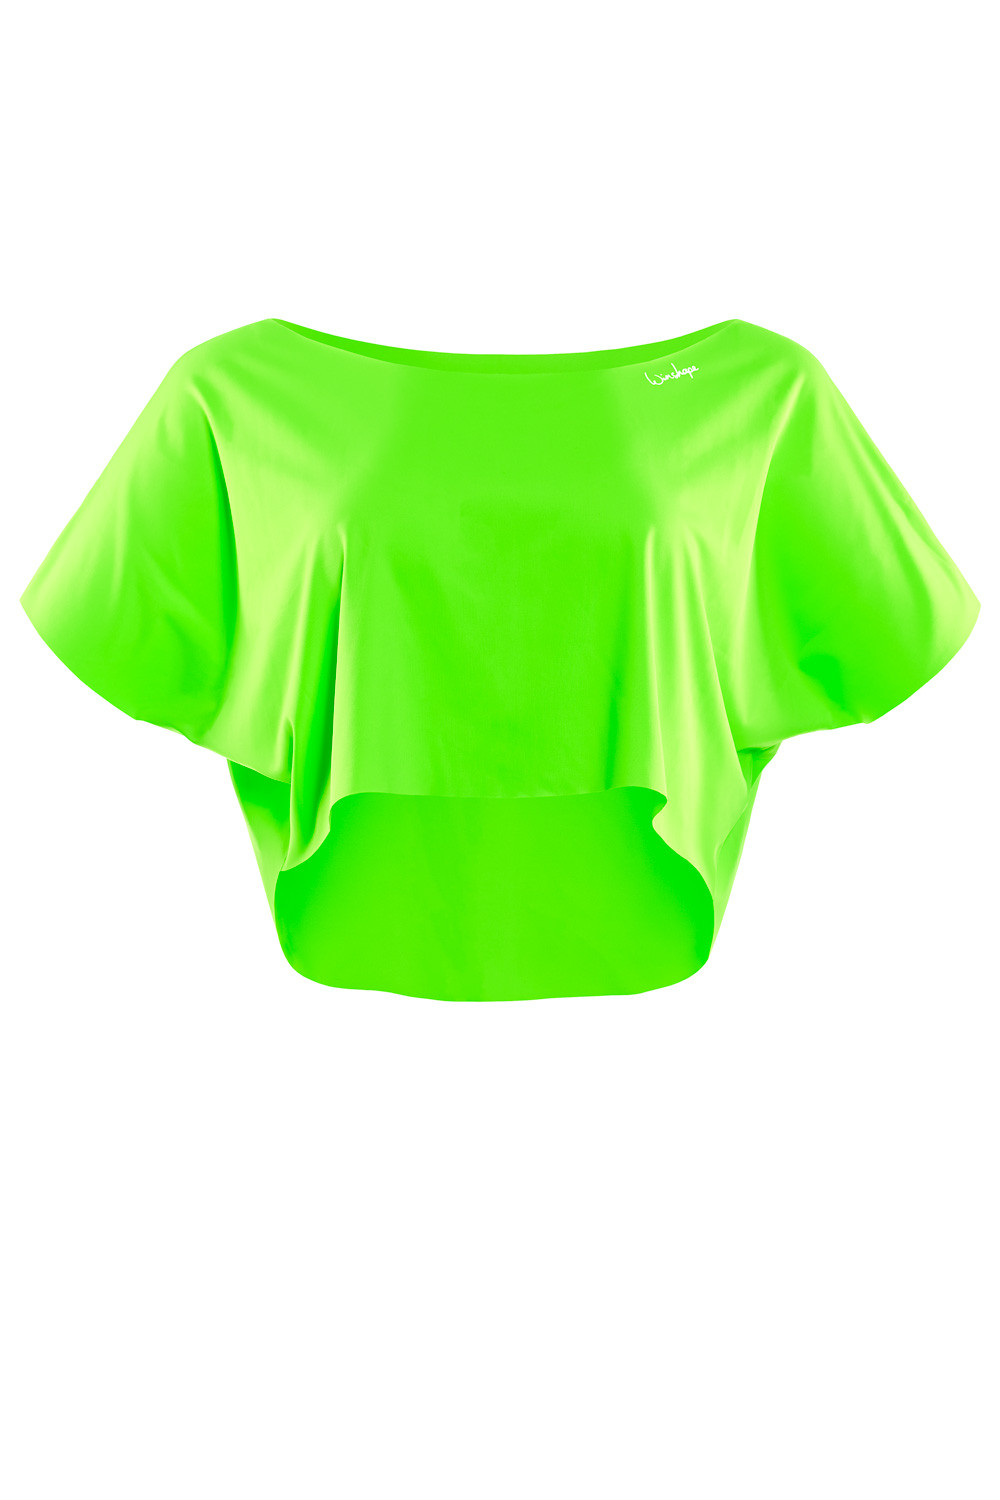 Functional Light Cropped grün, neon Style Dance Winshape DT104, Dance-Top